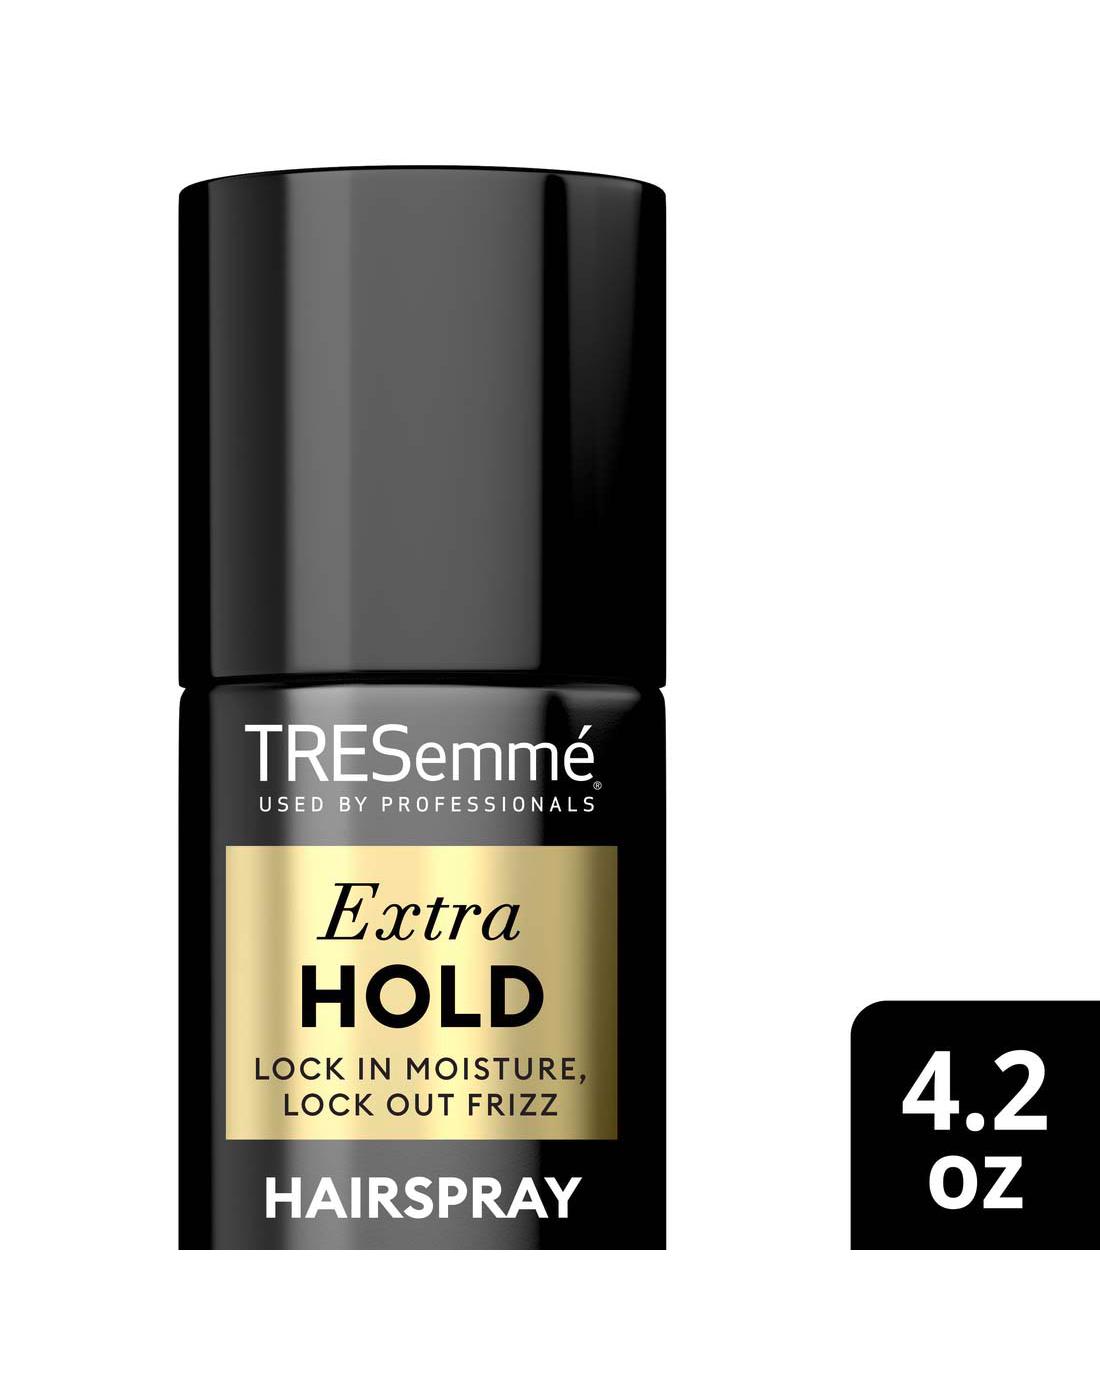 TRESemmé Extra Hold Hairspray; image 3 of 5